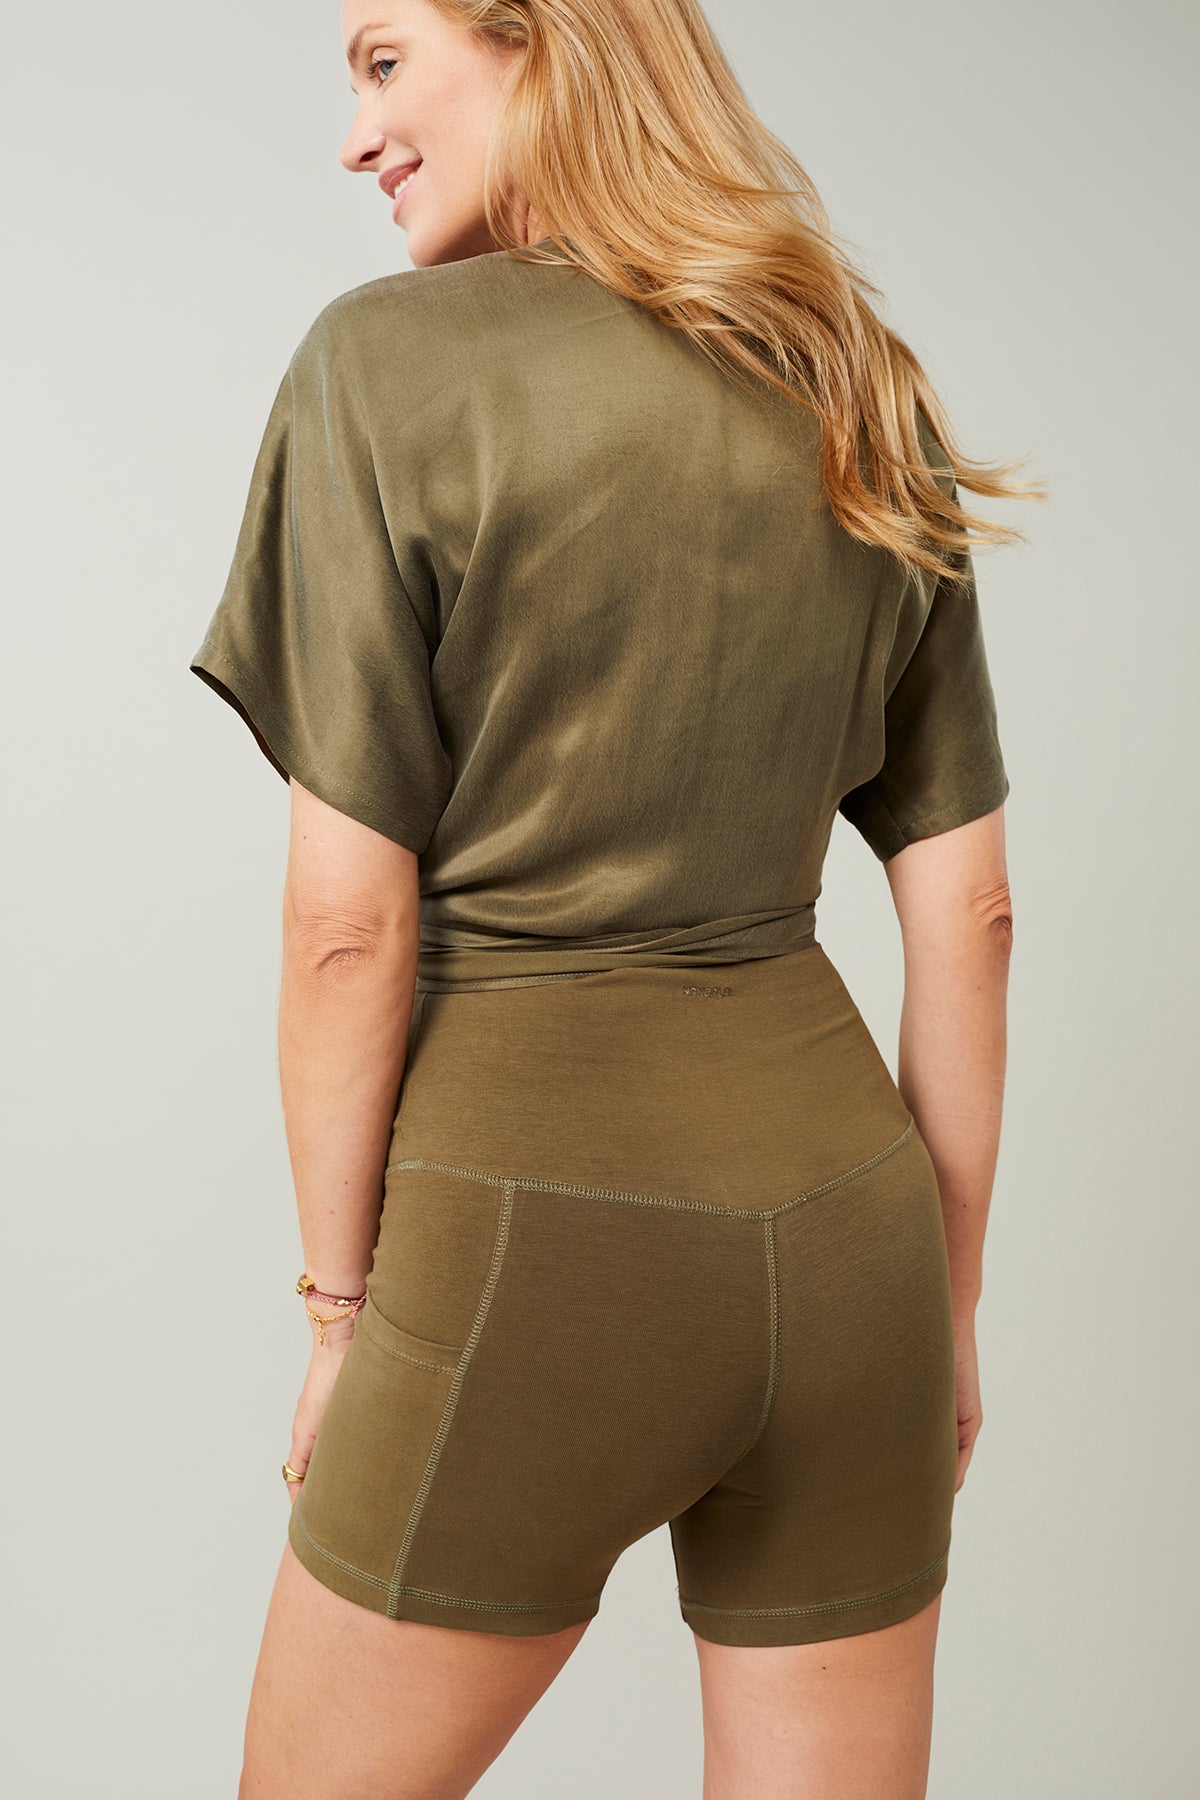 Mandala Yoga Jacke Grün Rückseite - Wrap Top Oversize